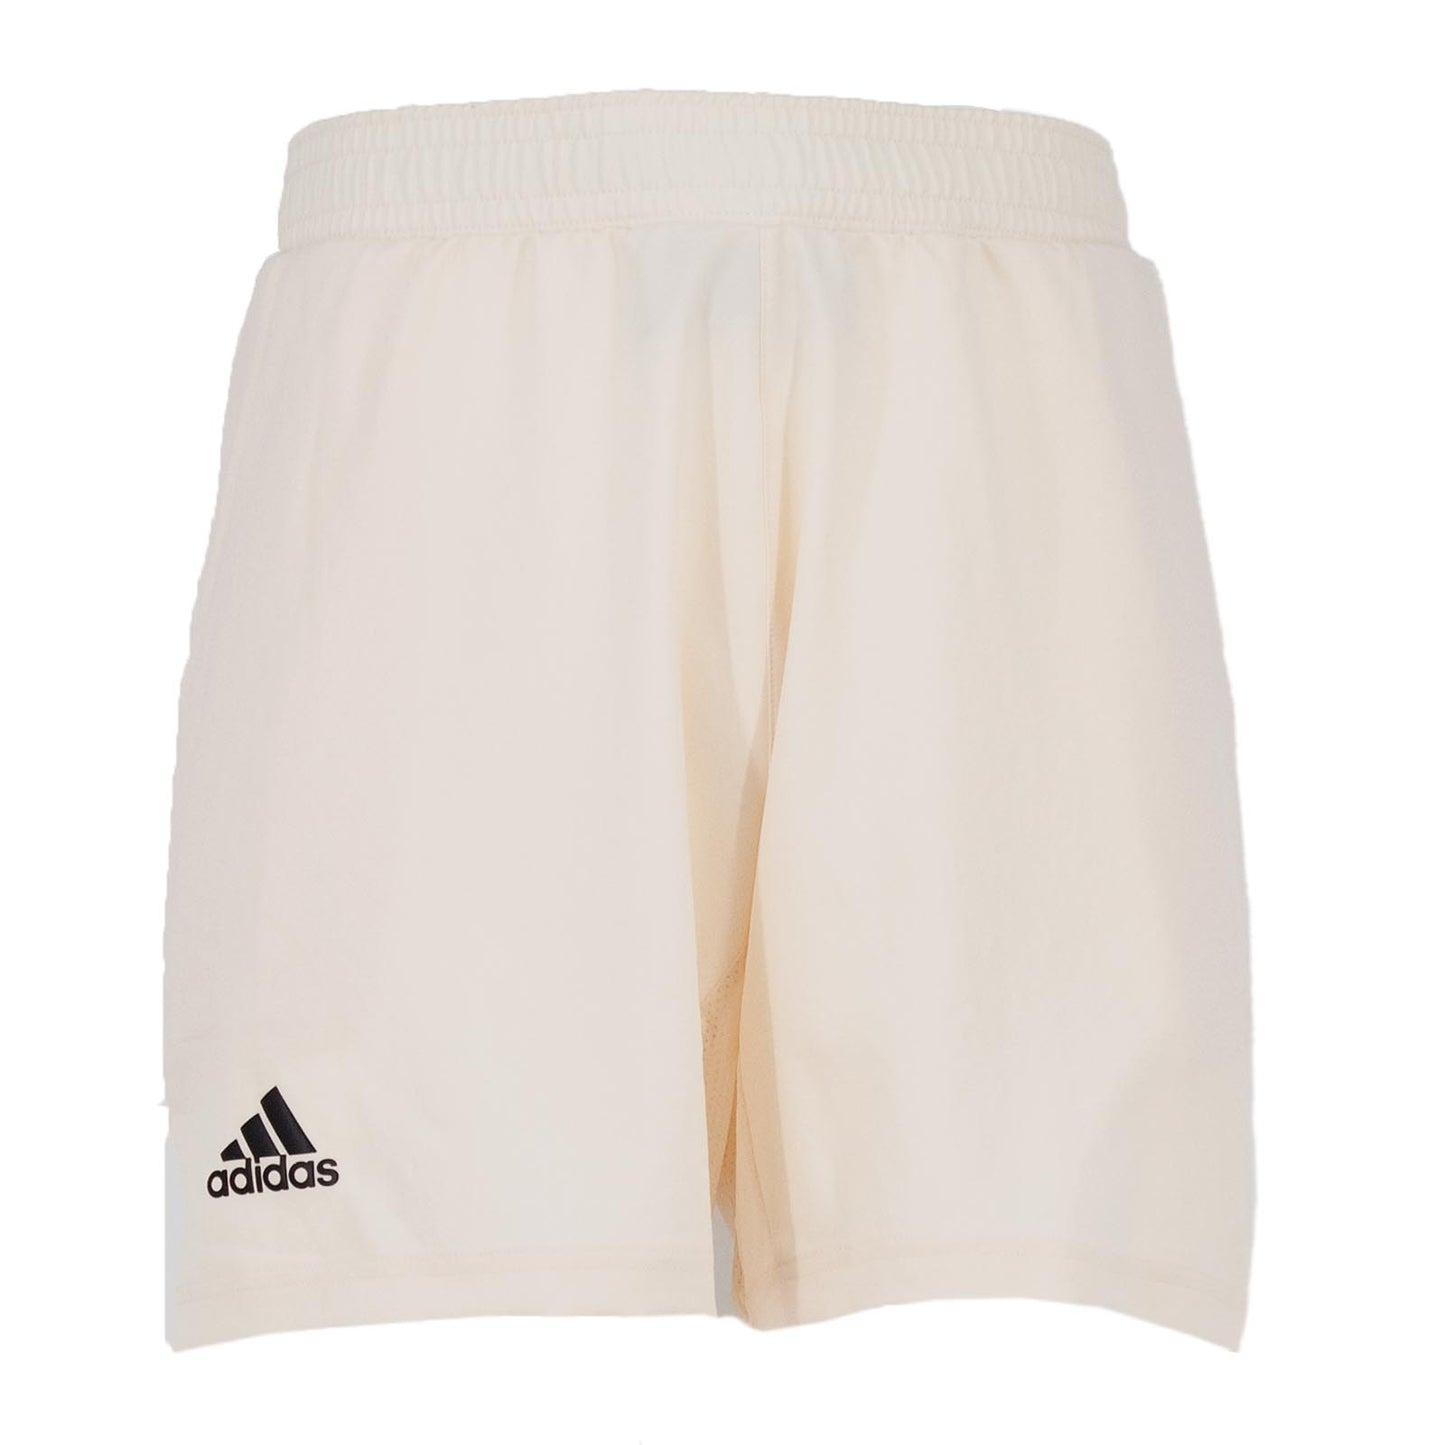 Adidas Tennis Ergo PB Primeblue Shorts kurze Hose Taschen Herren beige H31378